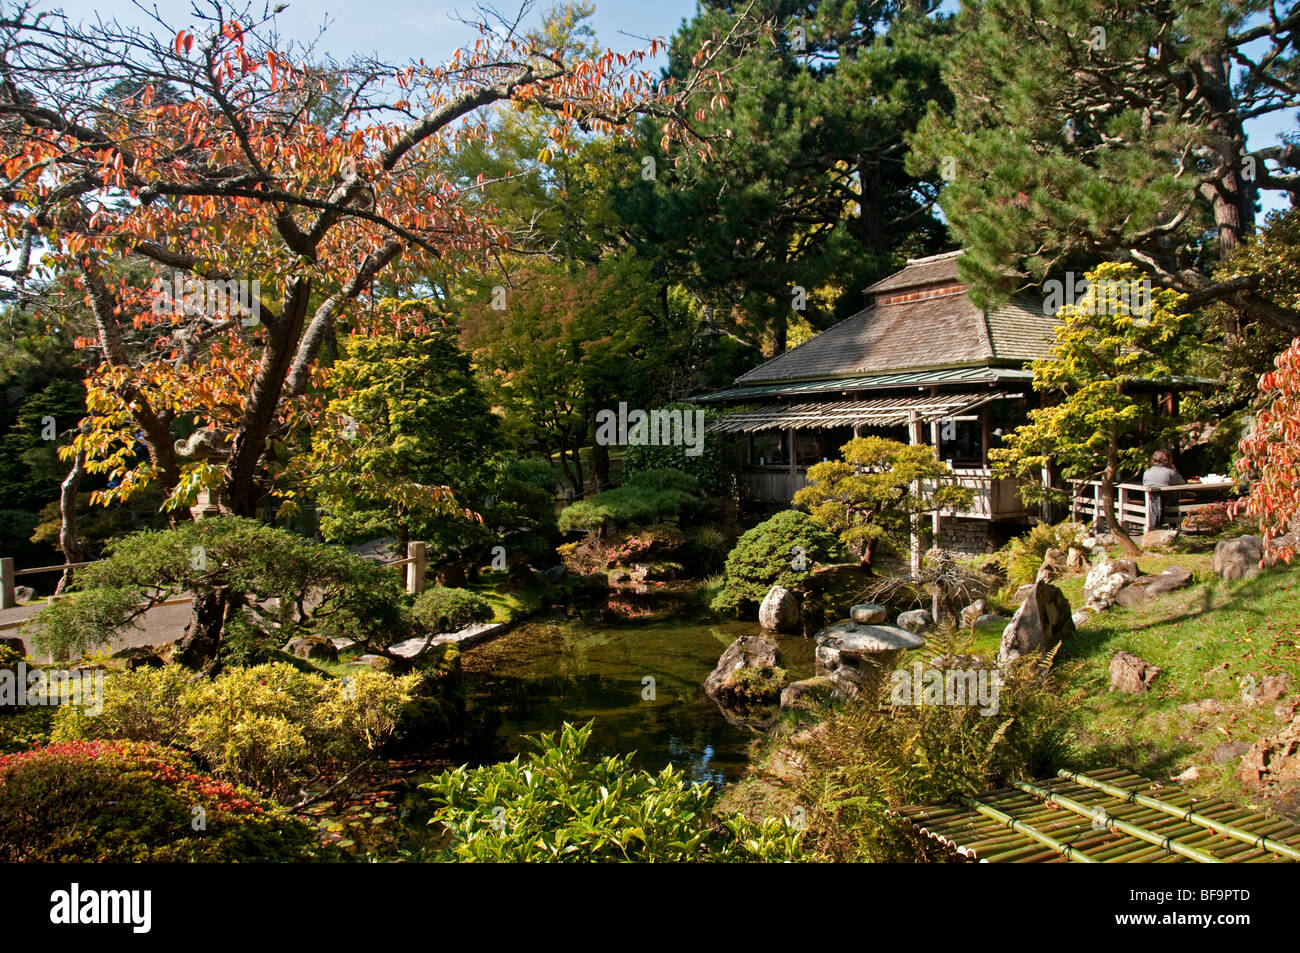 A Fall Day In The Japanese Tea Garden In San Francisco S Golden Gate Park California Stock Photo Alamy